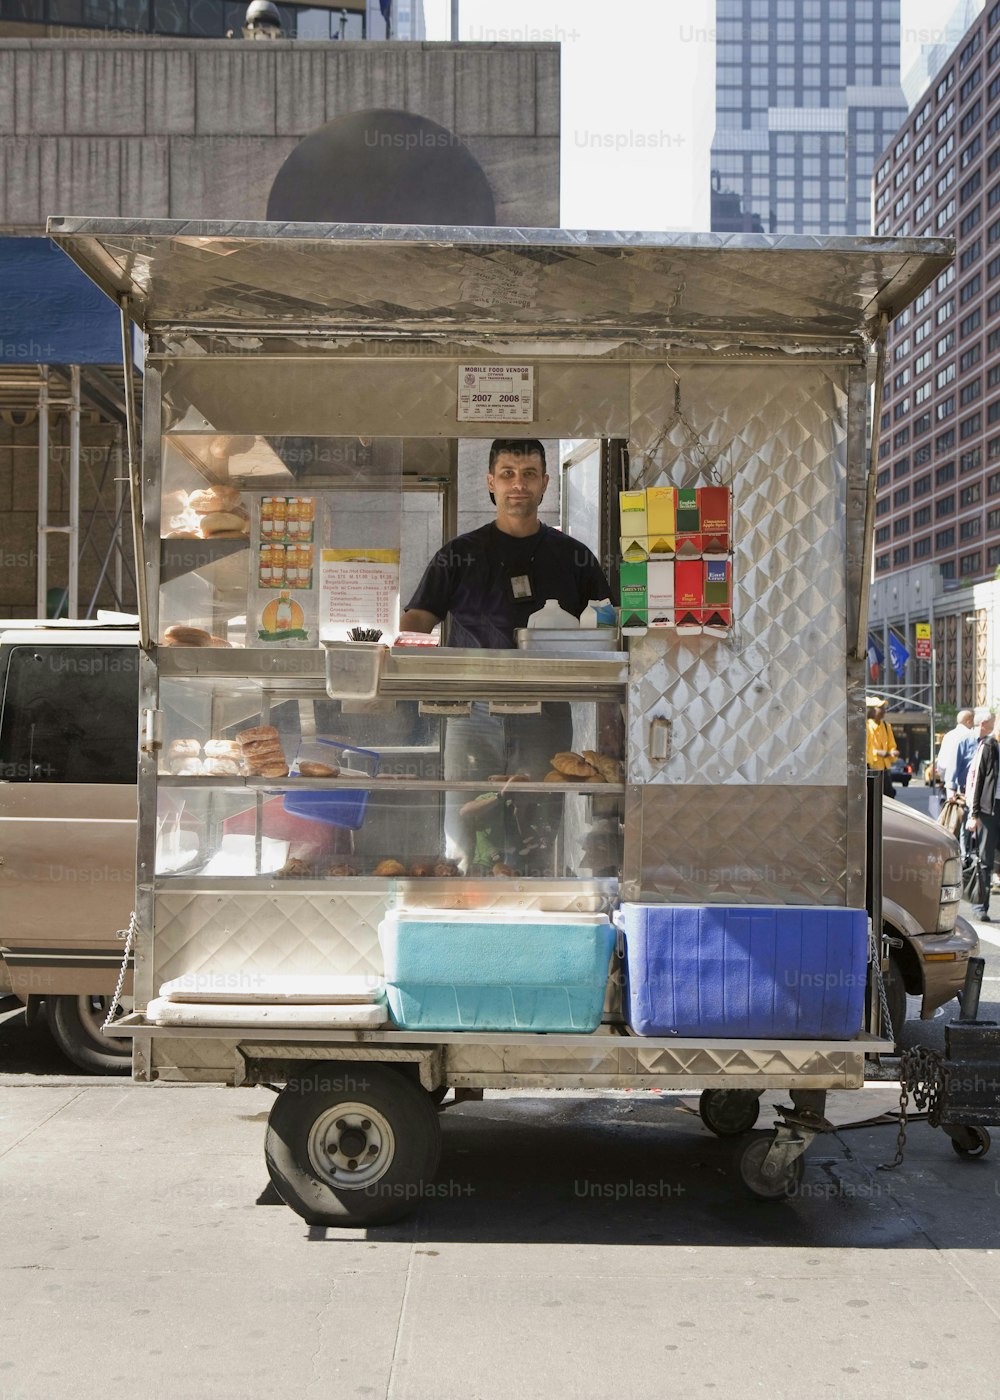 a man standing behind a food cart on a city street